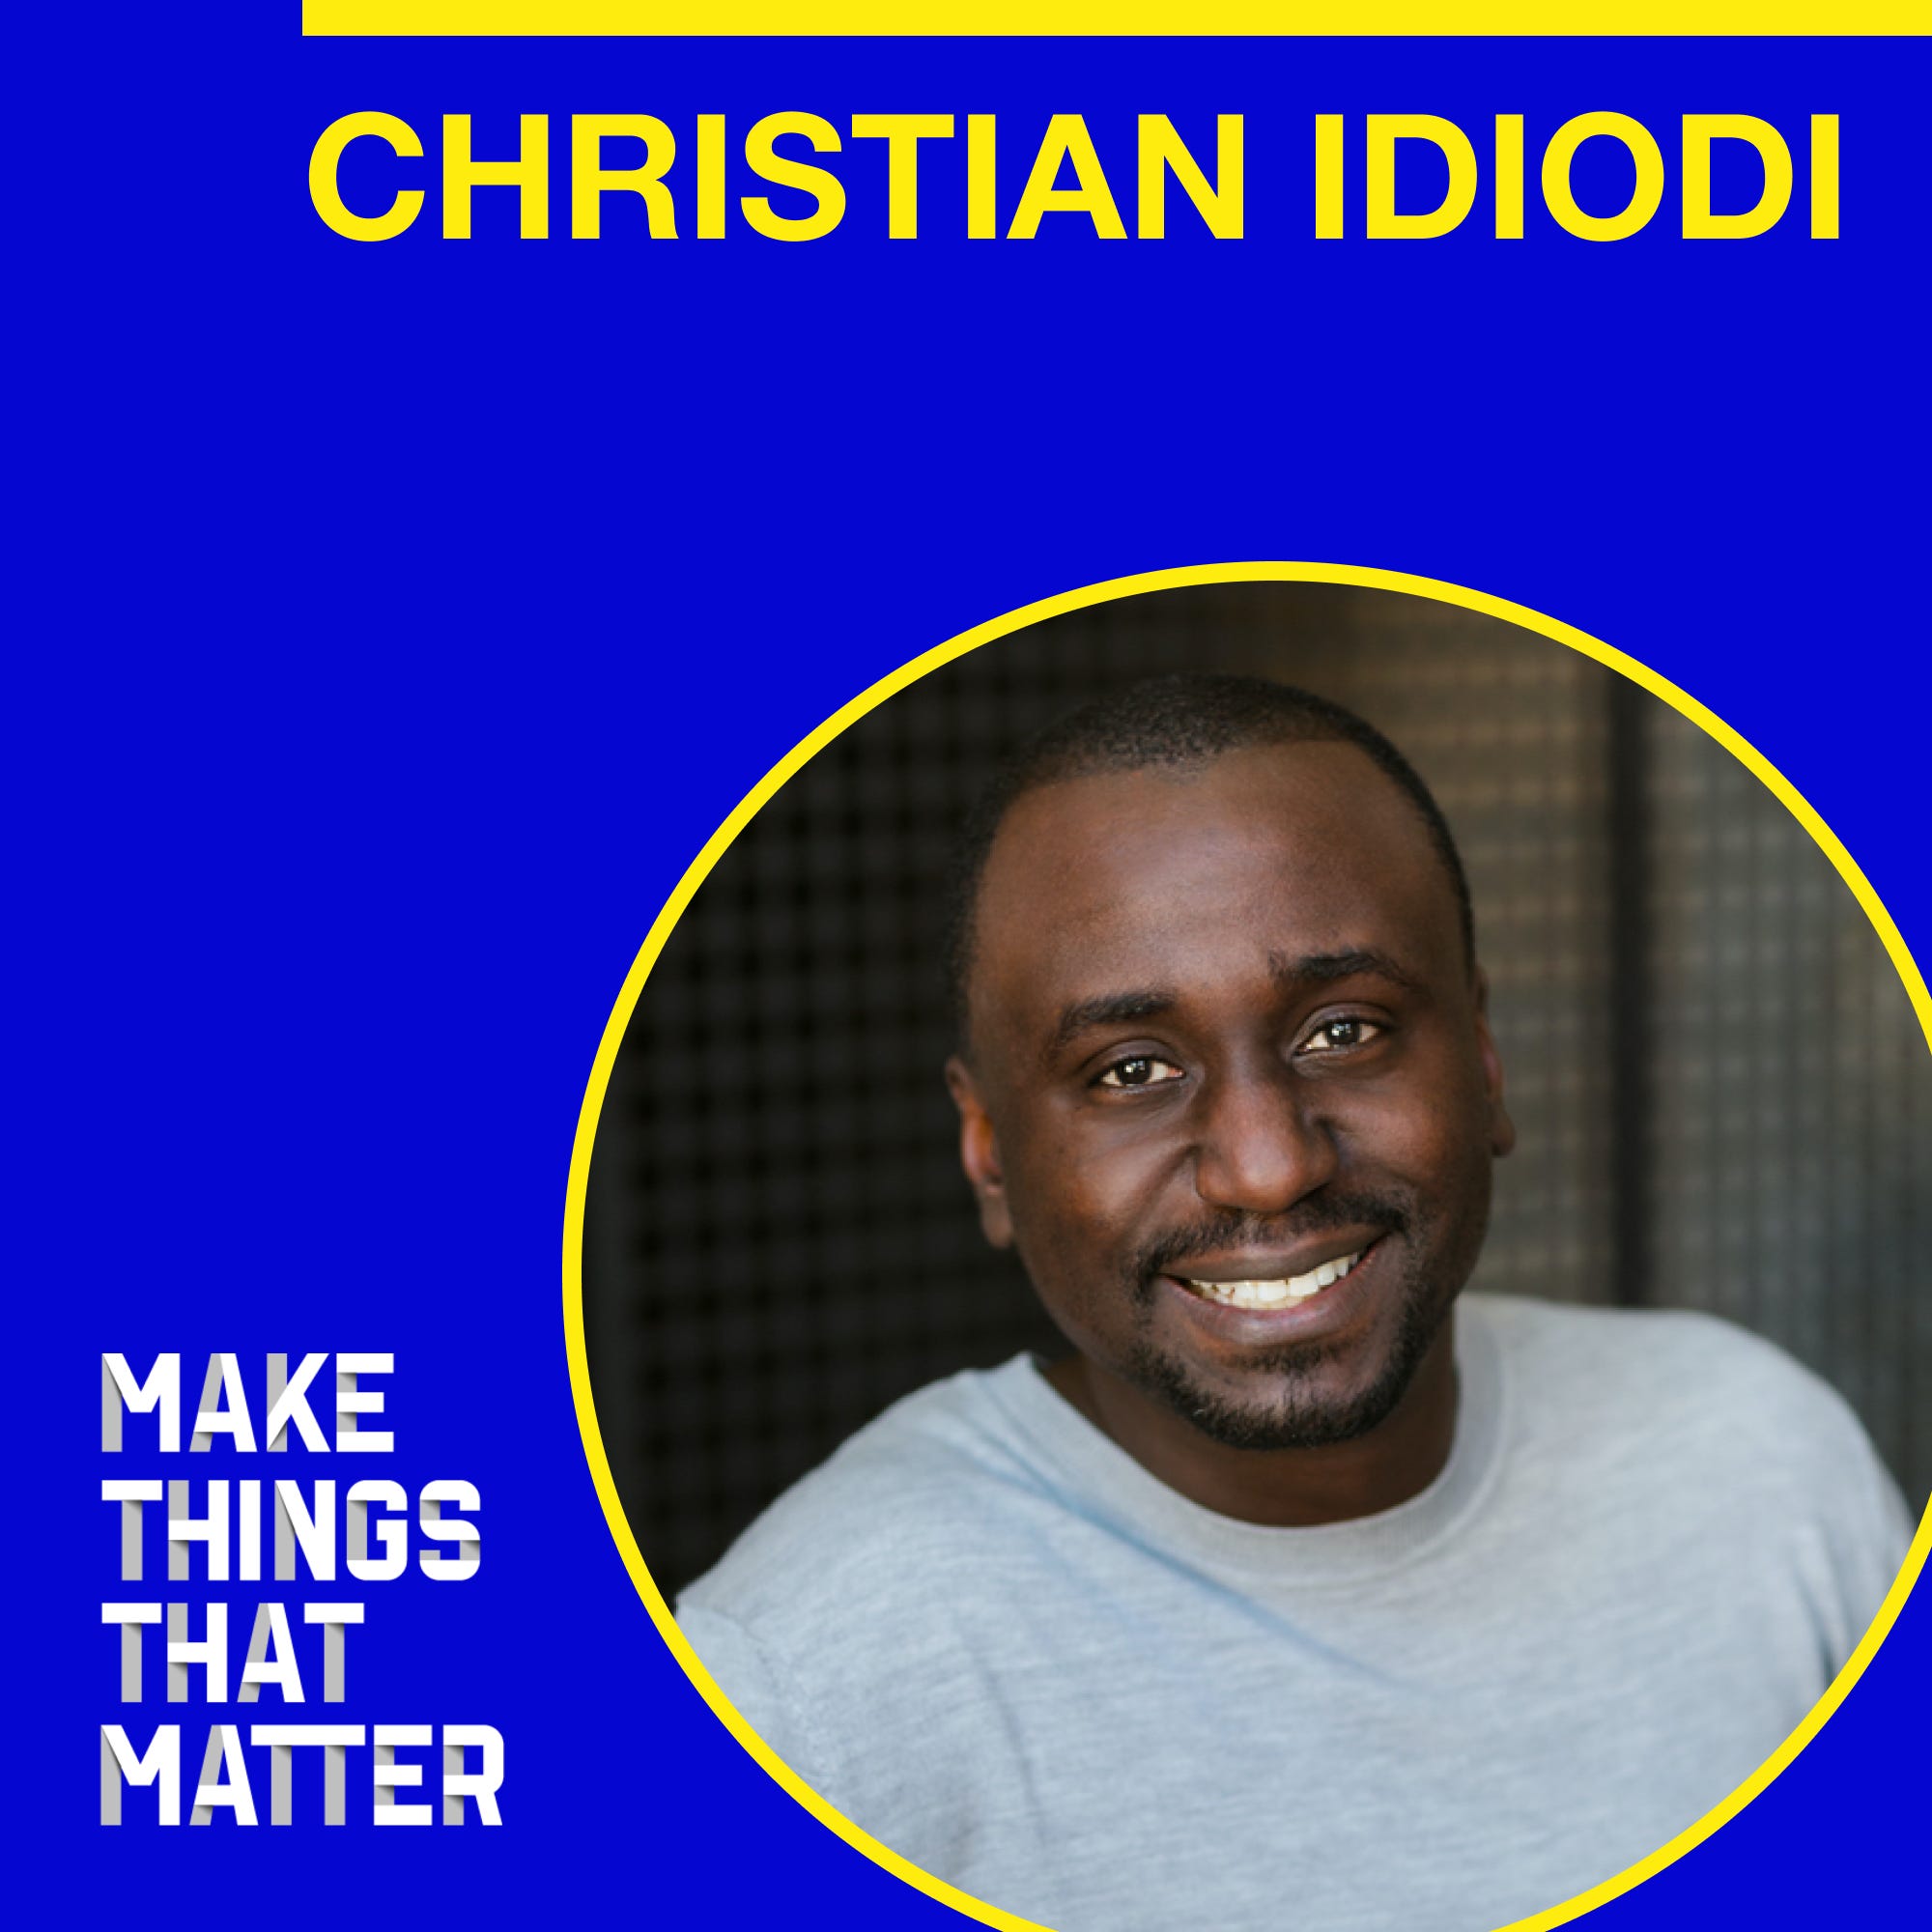 Christian Idiodi: Telling the story of transformation